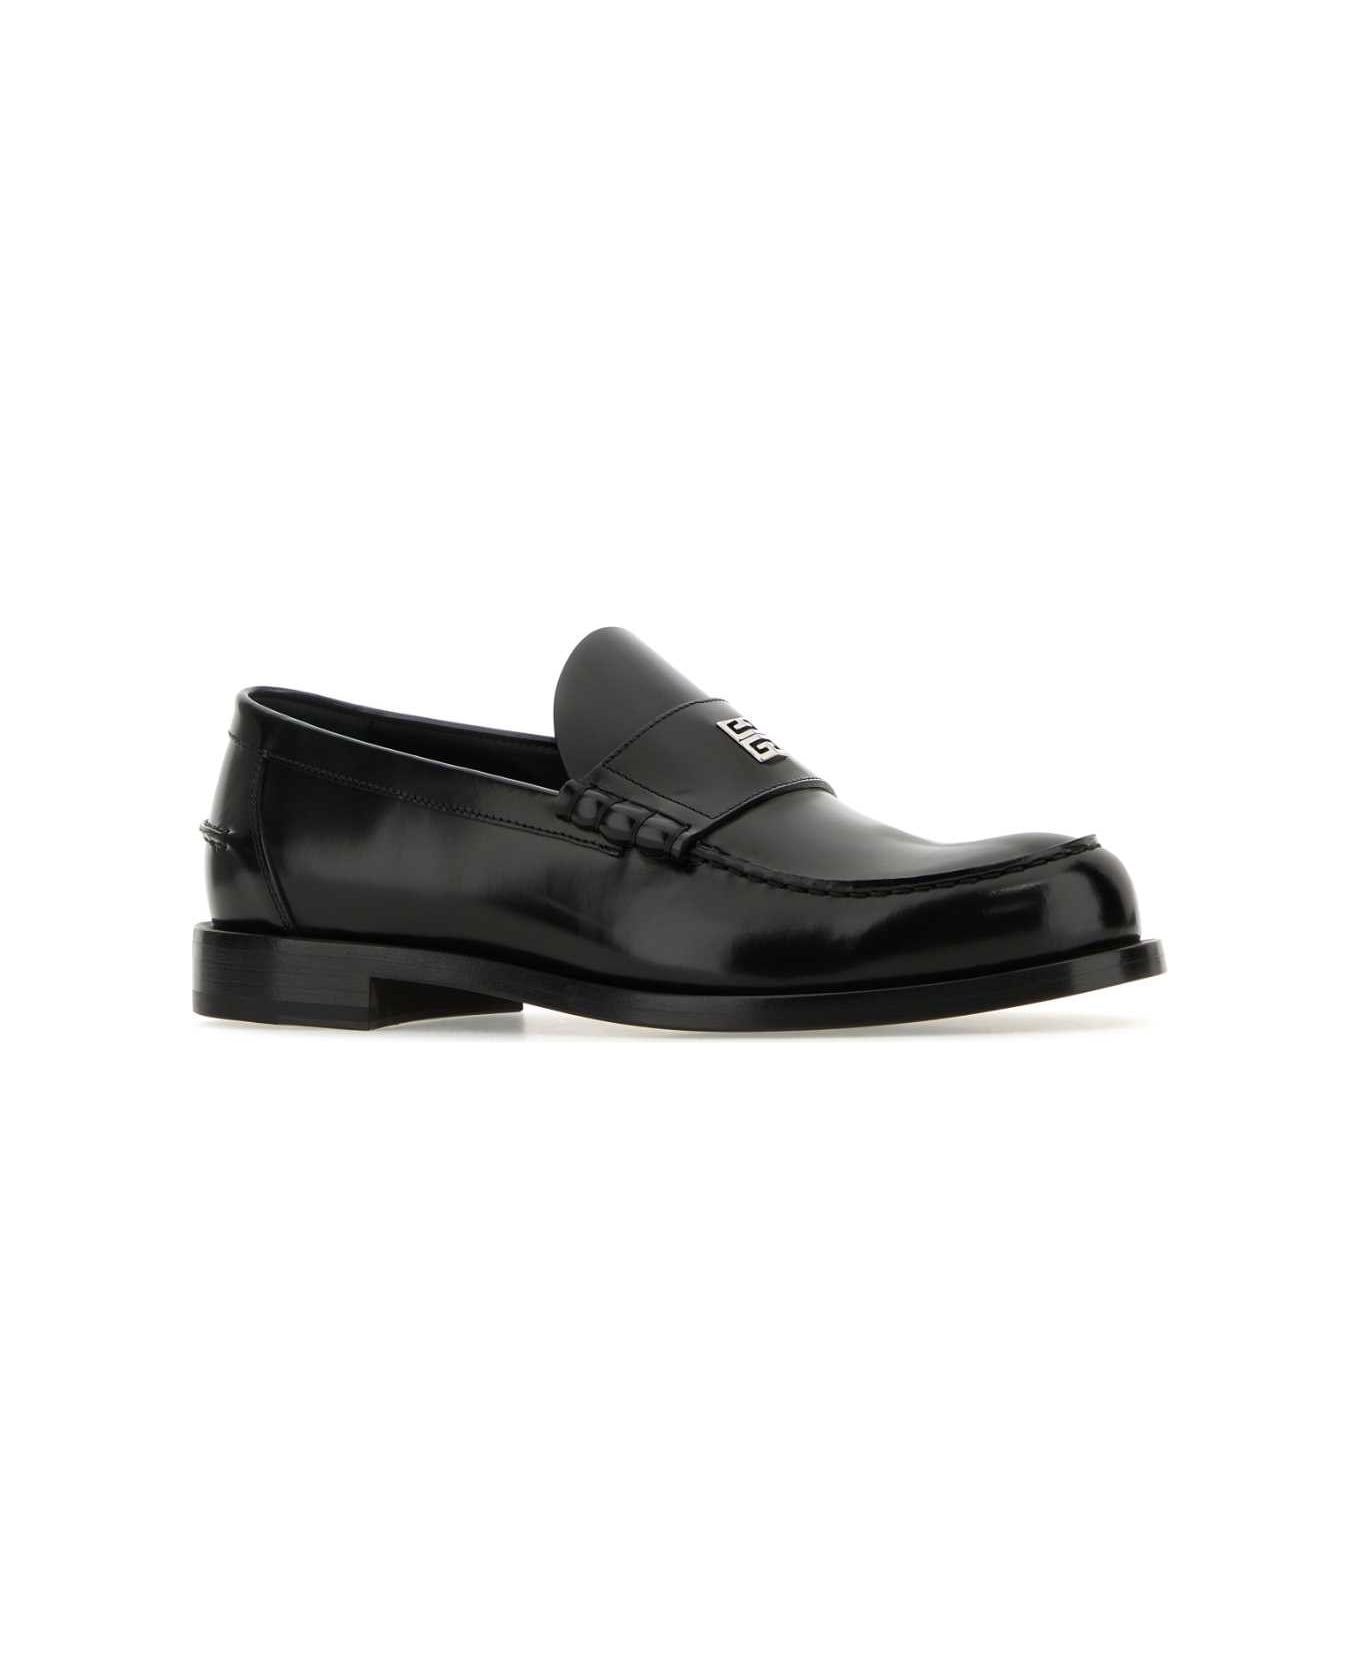 Givenchy Black Leather Mr G Loafers - BLACK